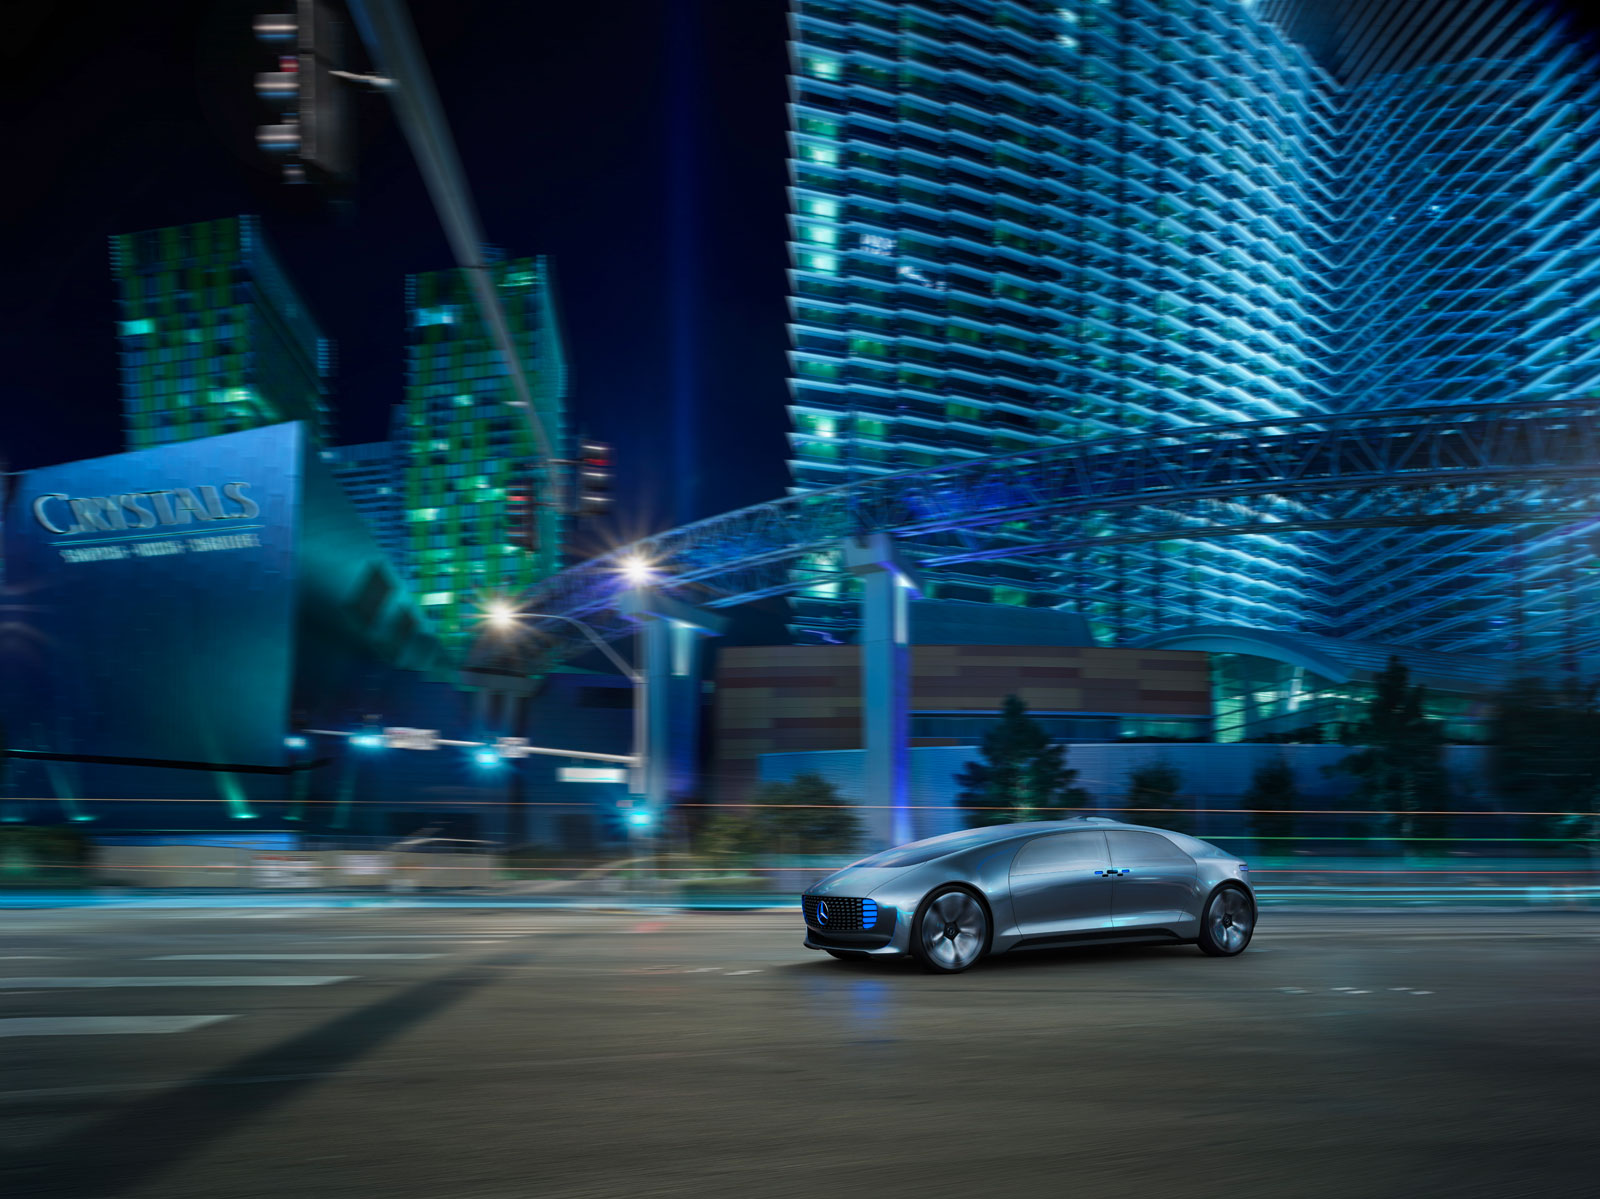 Mercedes-Benz F 015 Luxury in Motion, 2015